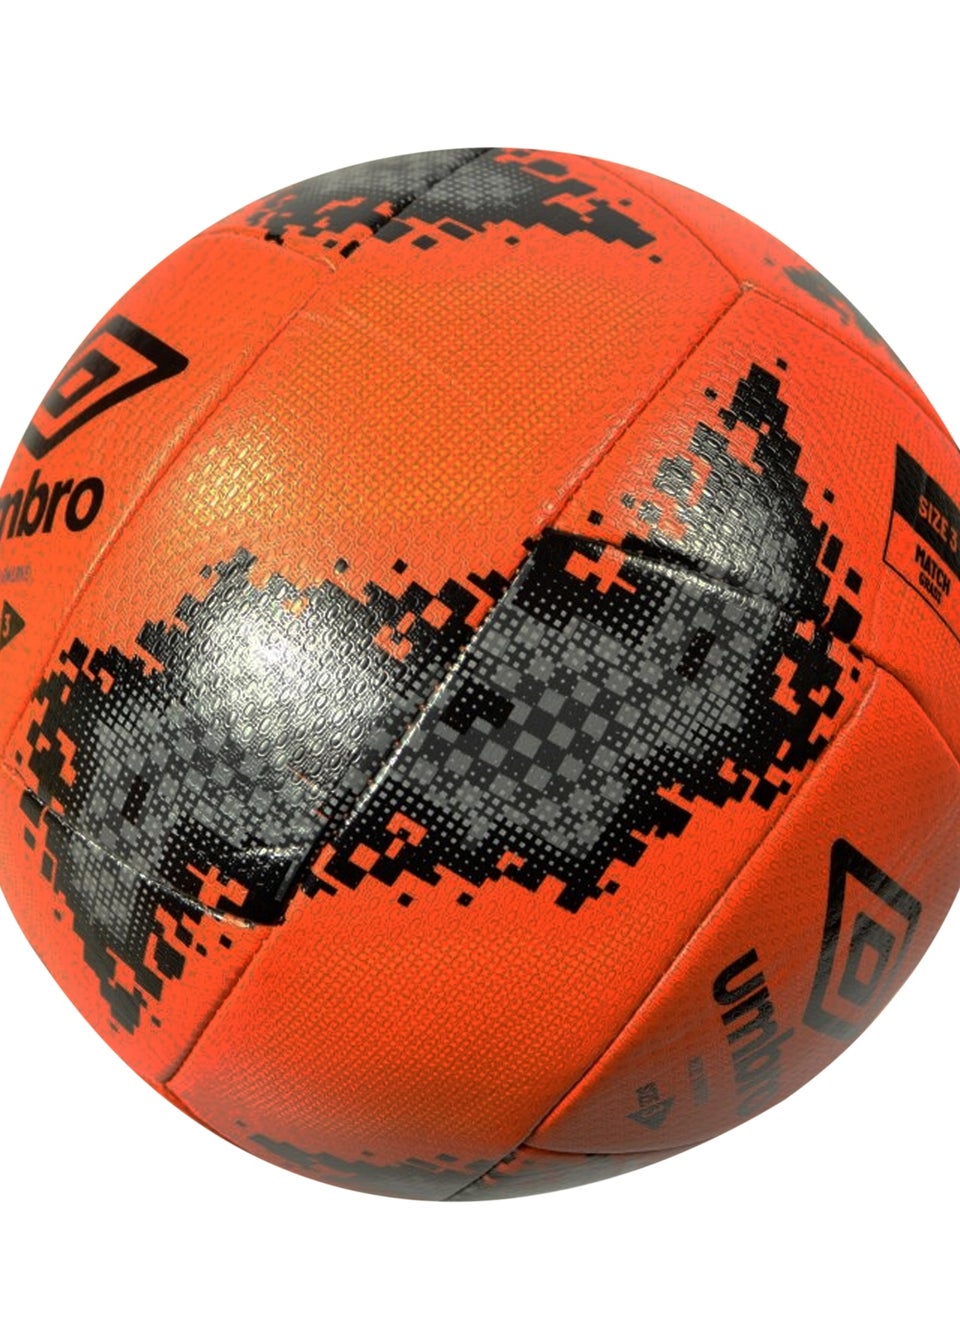 Umbro Orange Neo Swerve Football